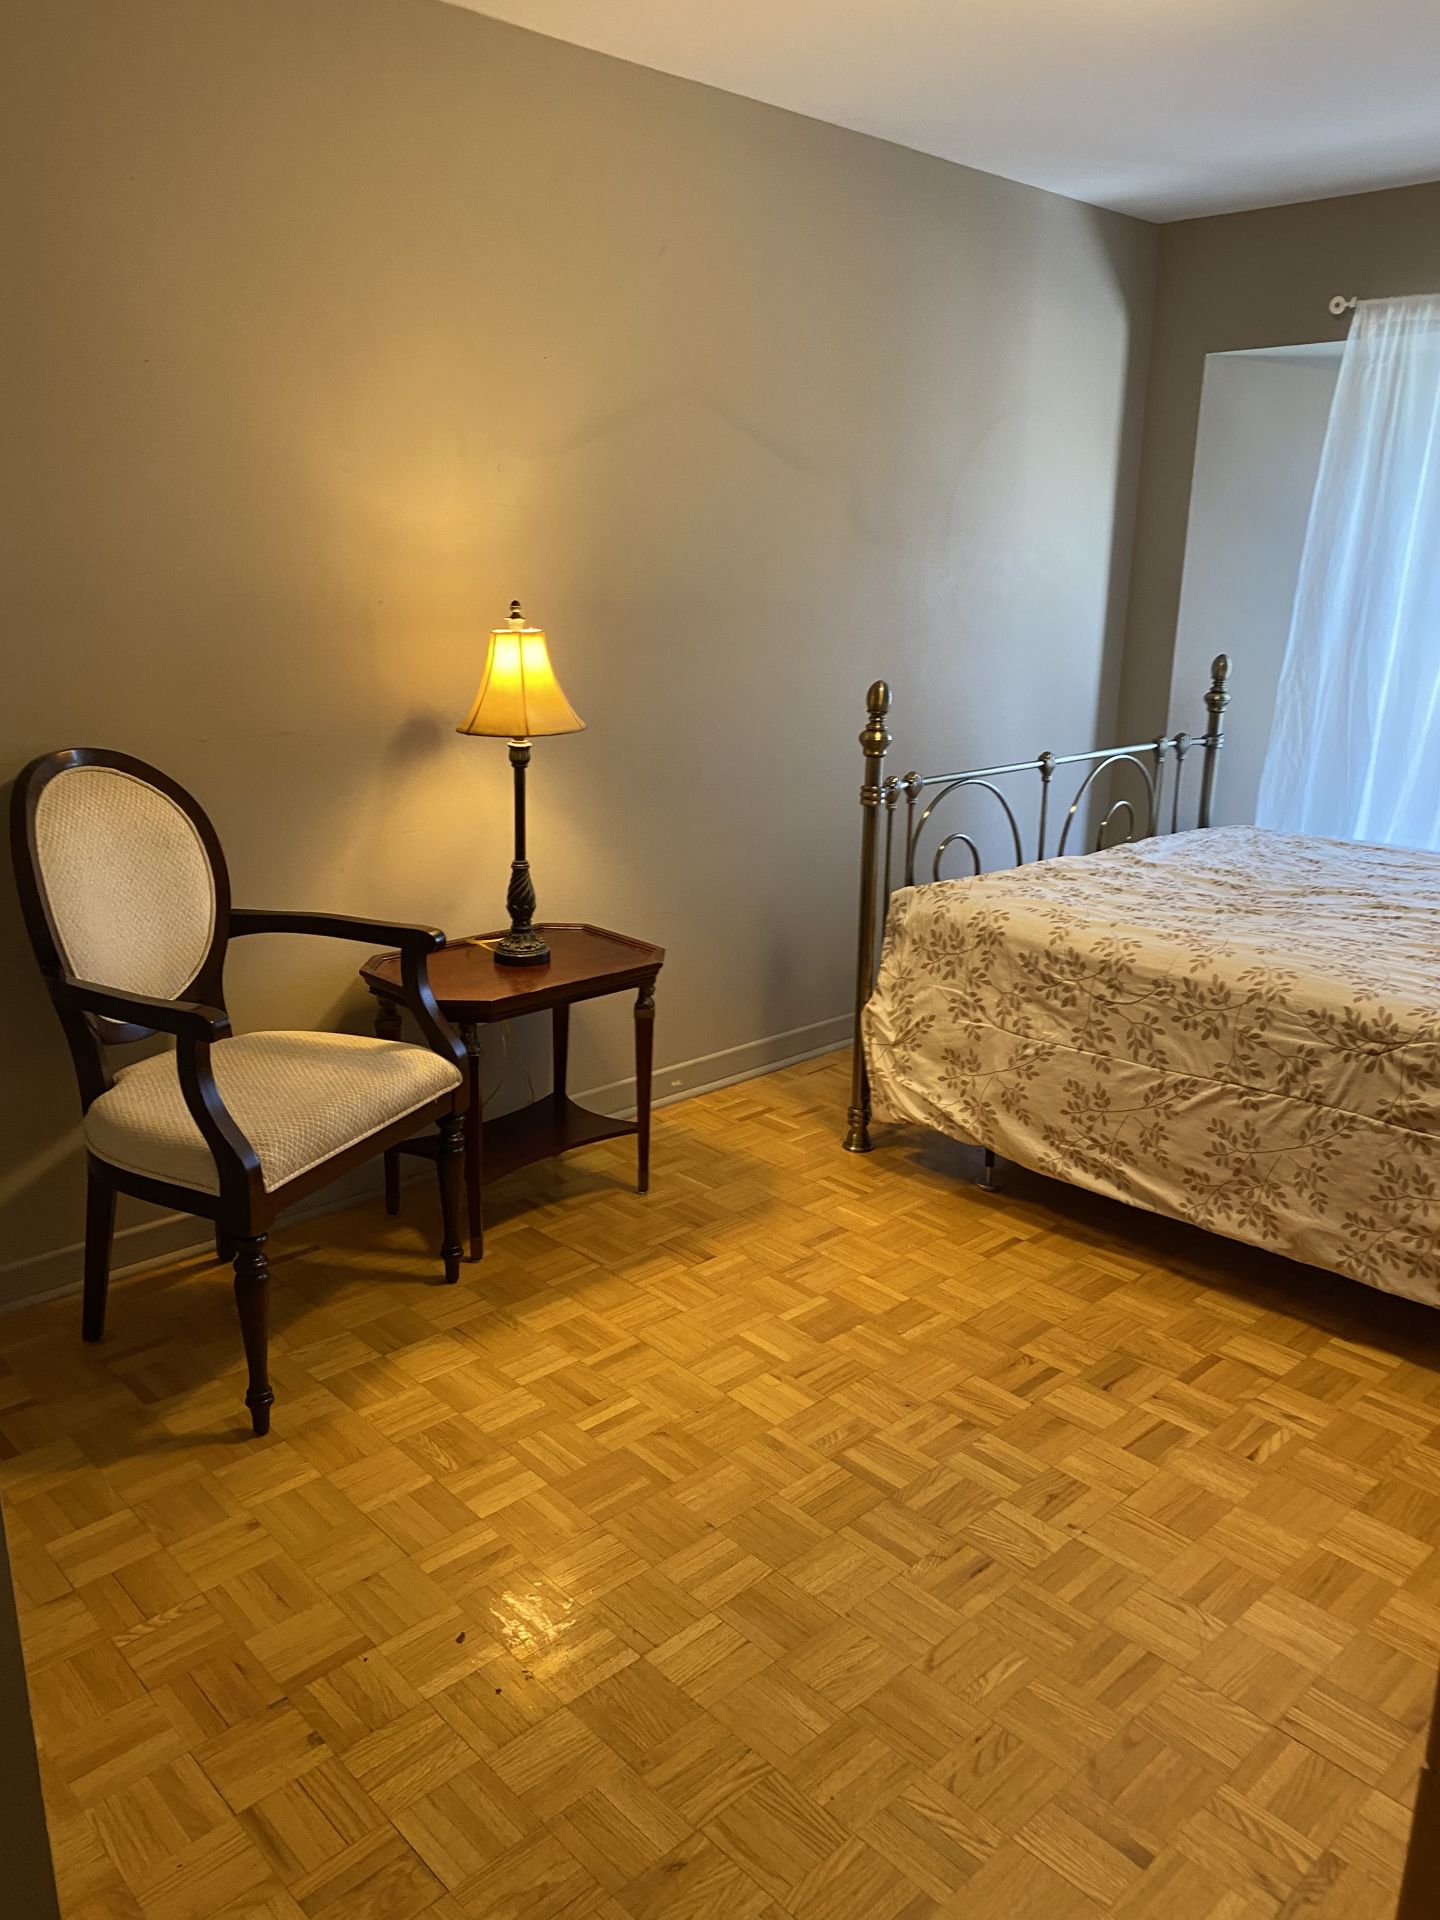 Cozy Homestay Room - Markham room for rent 4